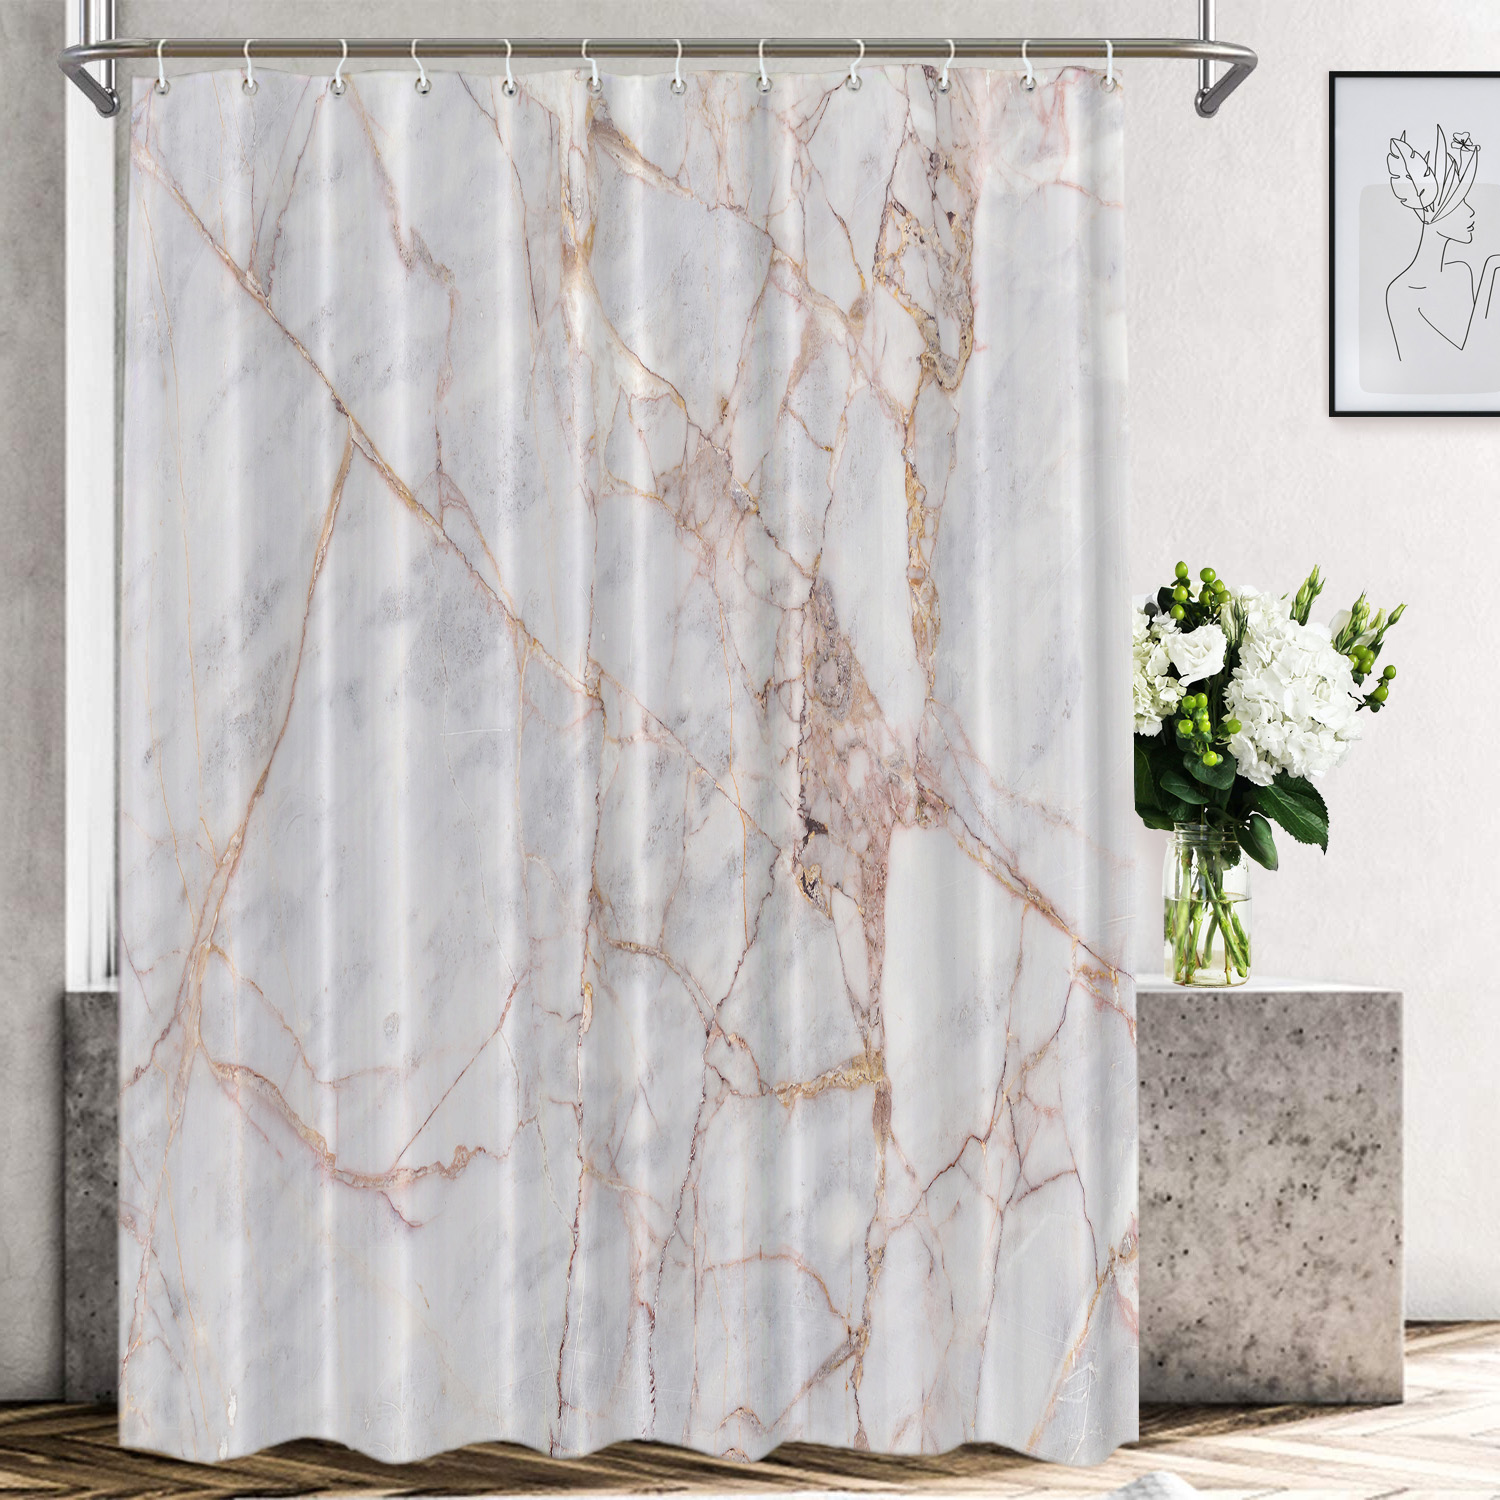  Decorative Shower Curtain Hooks - All Discounts